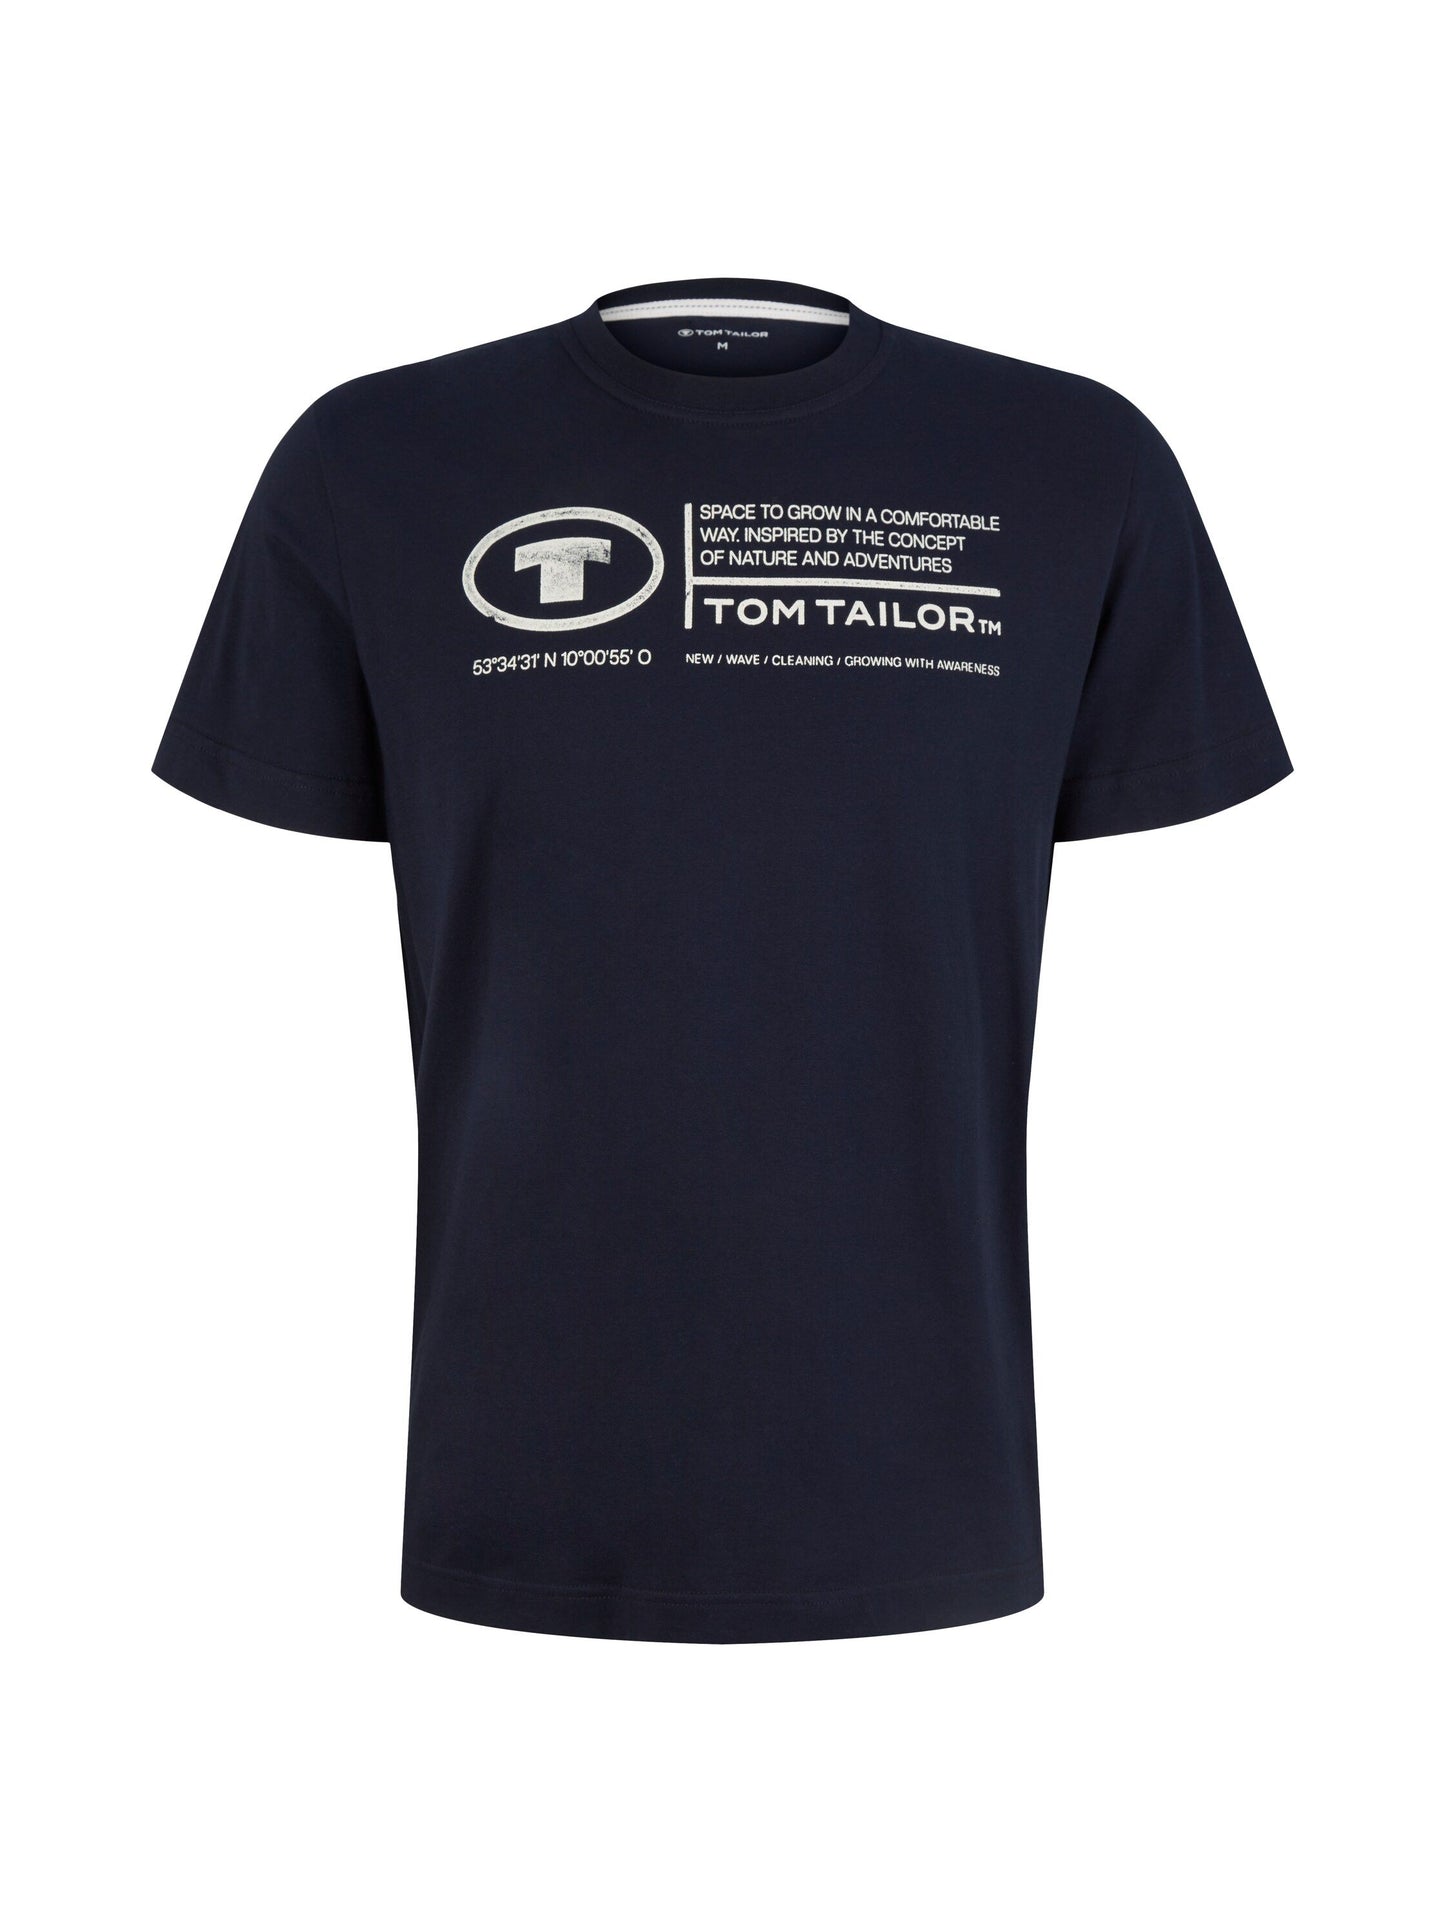 Tom Tailor Herren T-Shirt mit Print